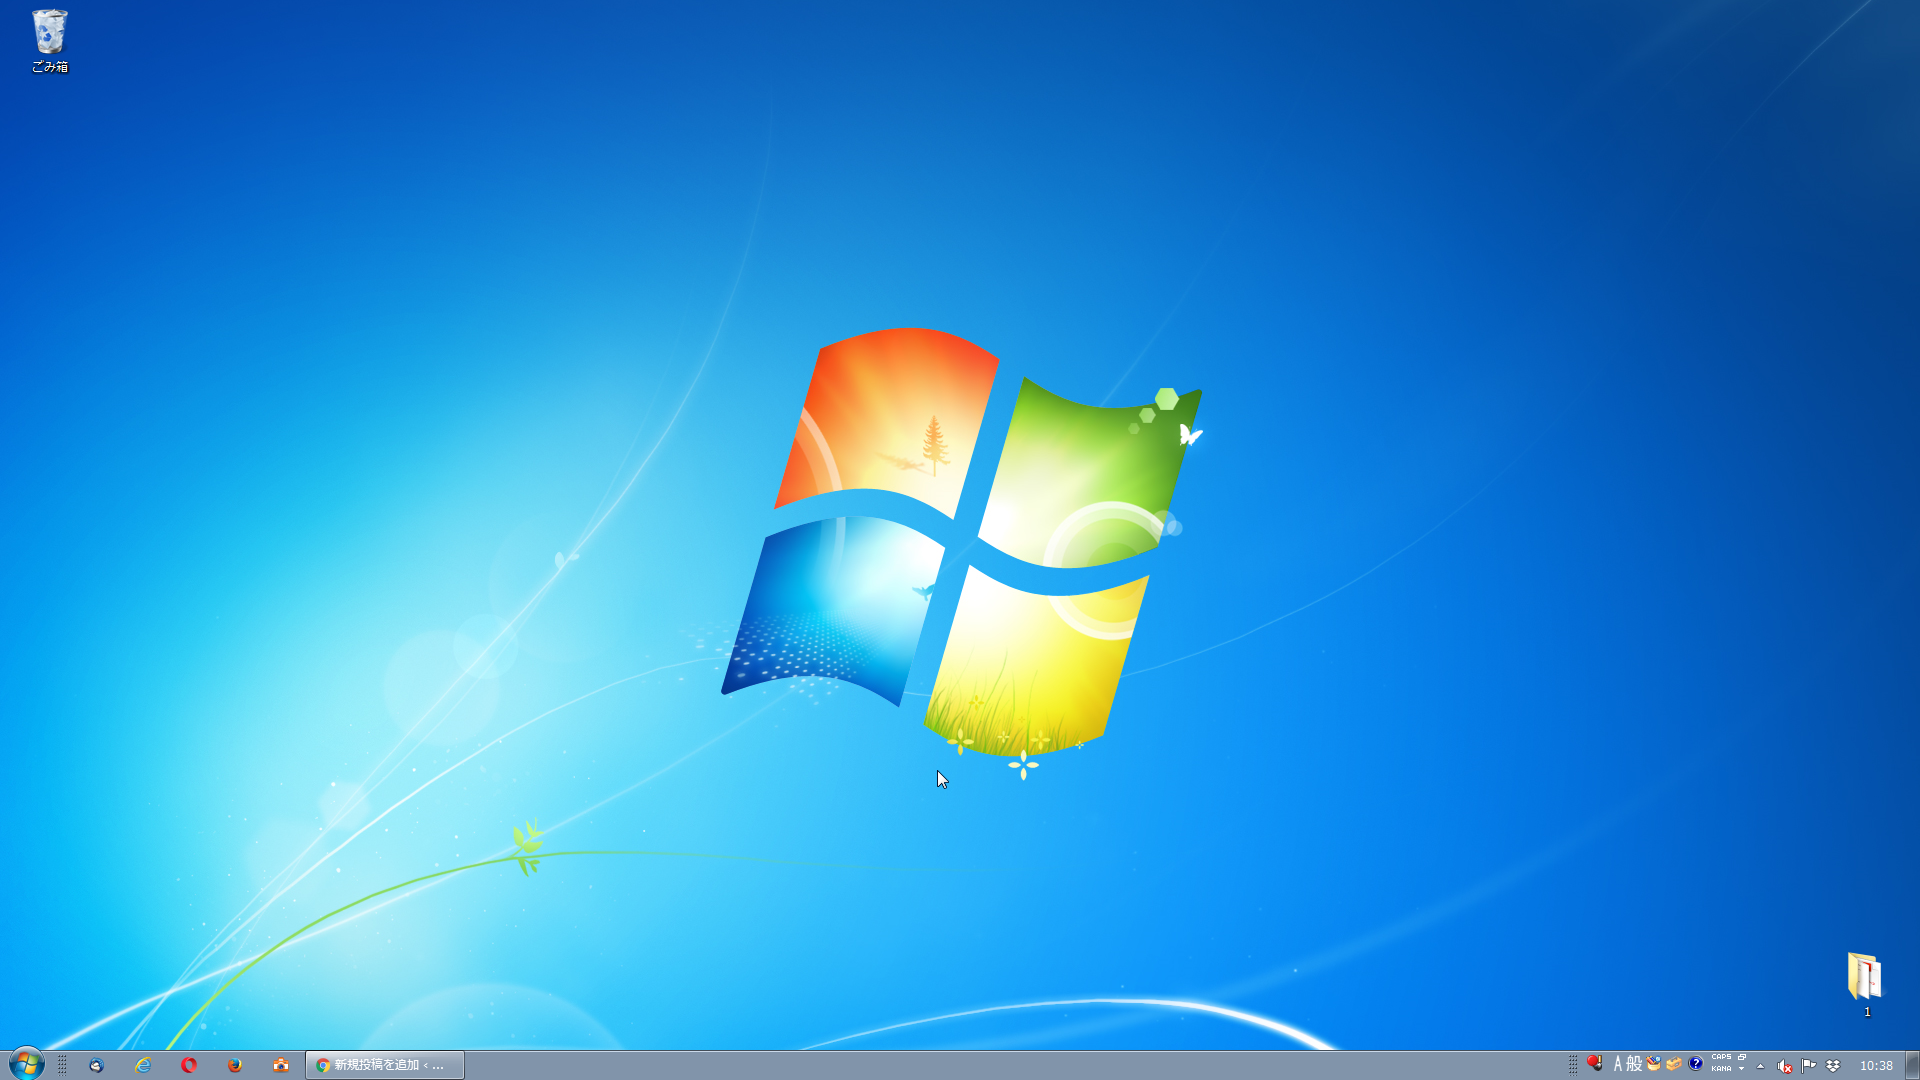 Windows7 デスクトップの壁紙 背景 の変え方の設定方法 パソコンの問題を改善